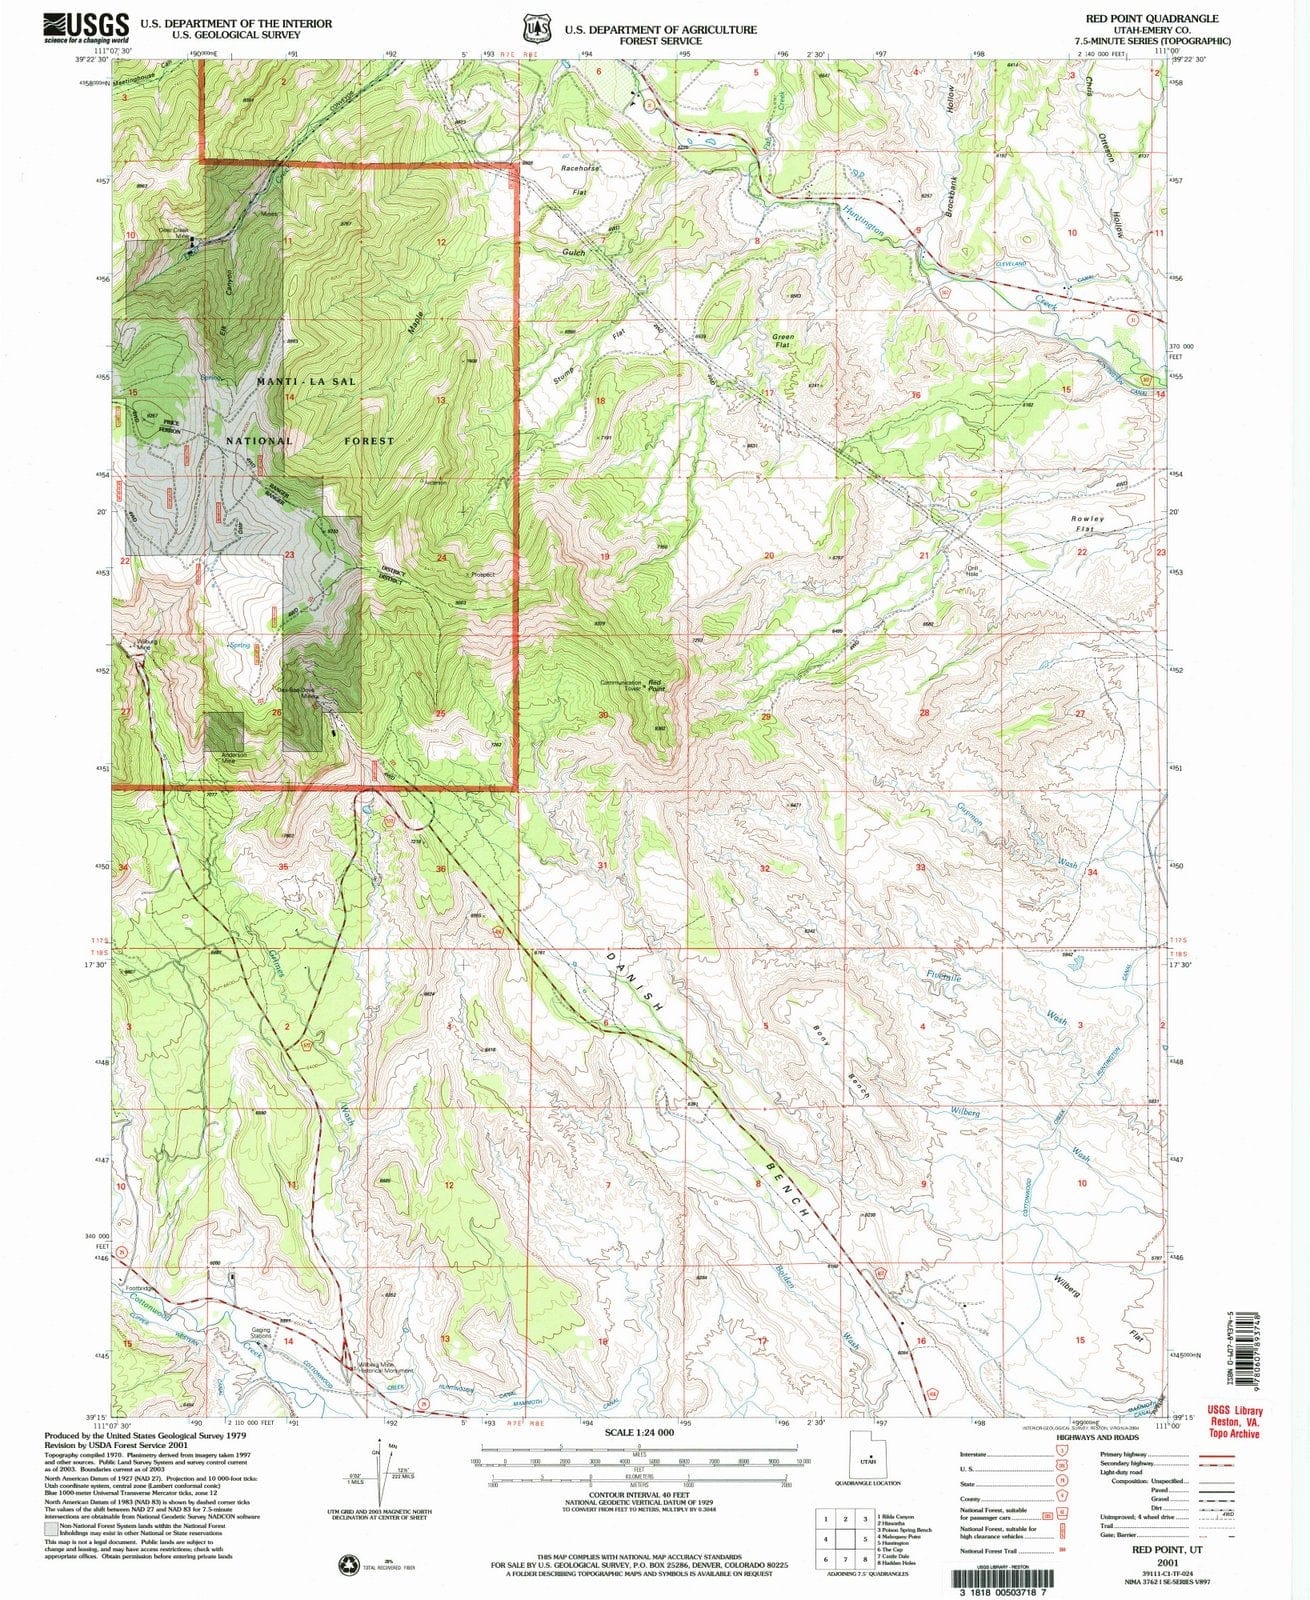 2001 Red Point, UT - Utah - USGS Topographic Map